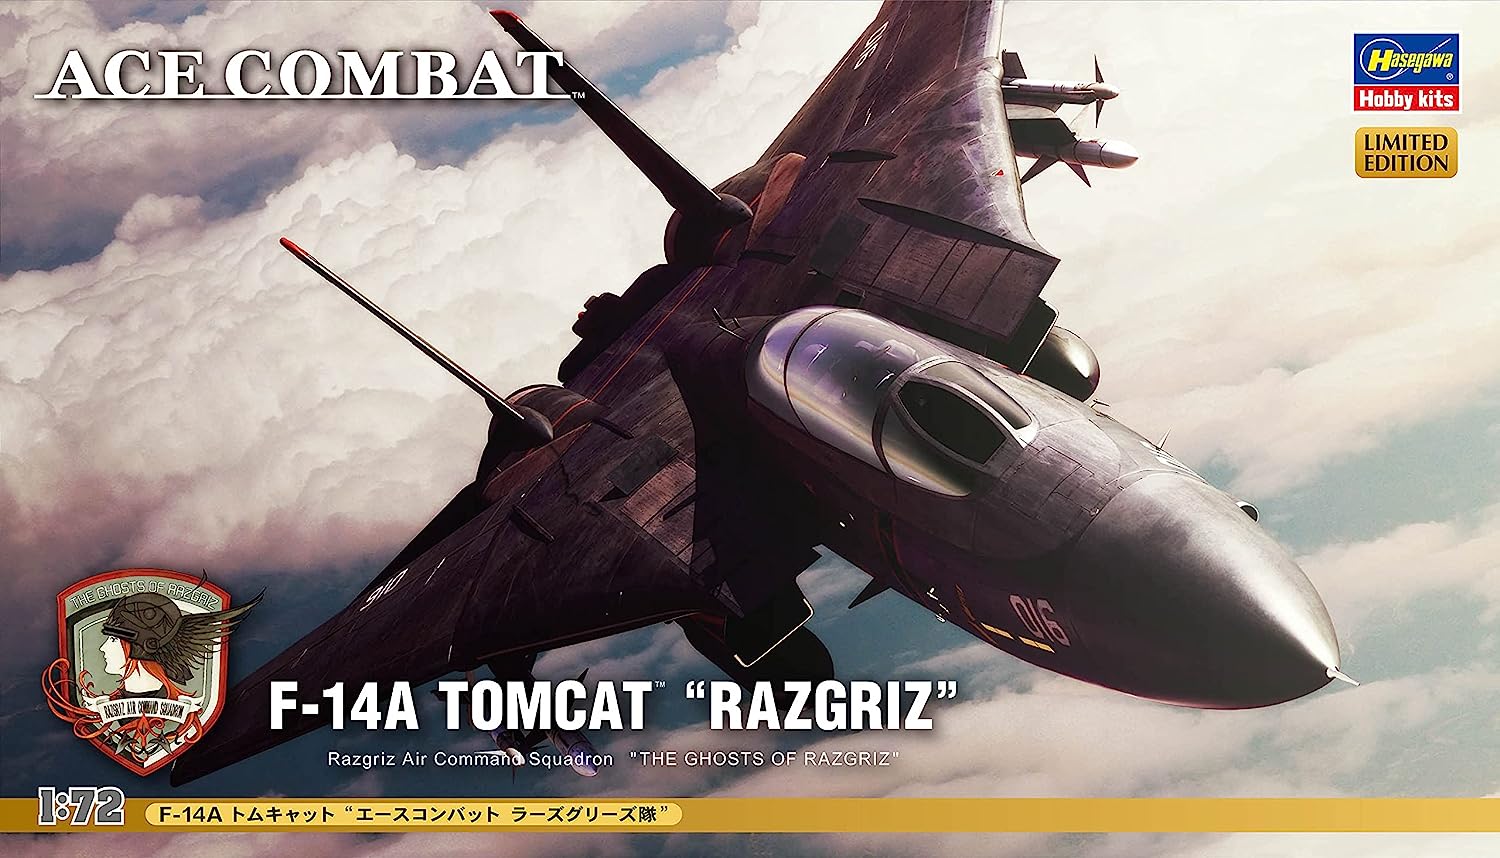 F-14A Tomcat `Ace Combat Razgriz Squadron`